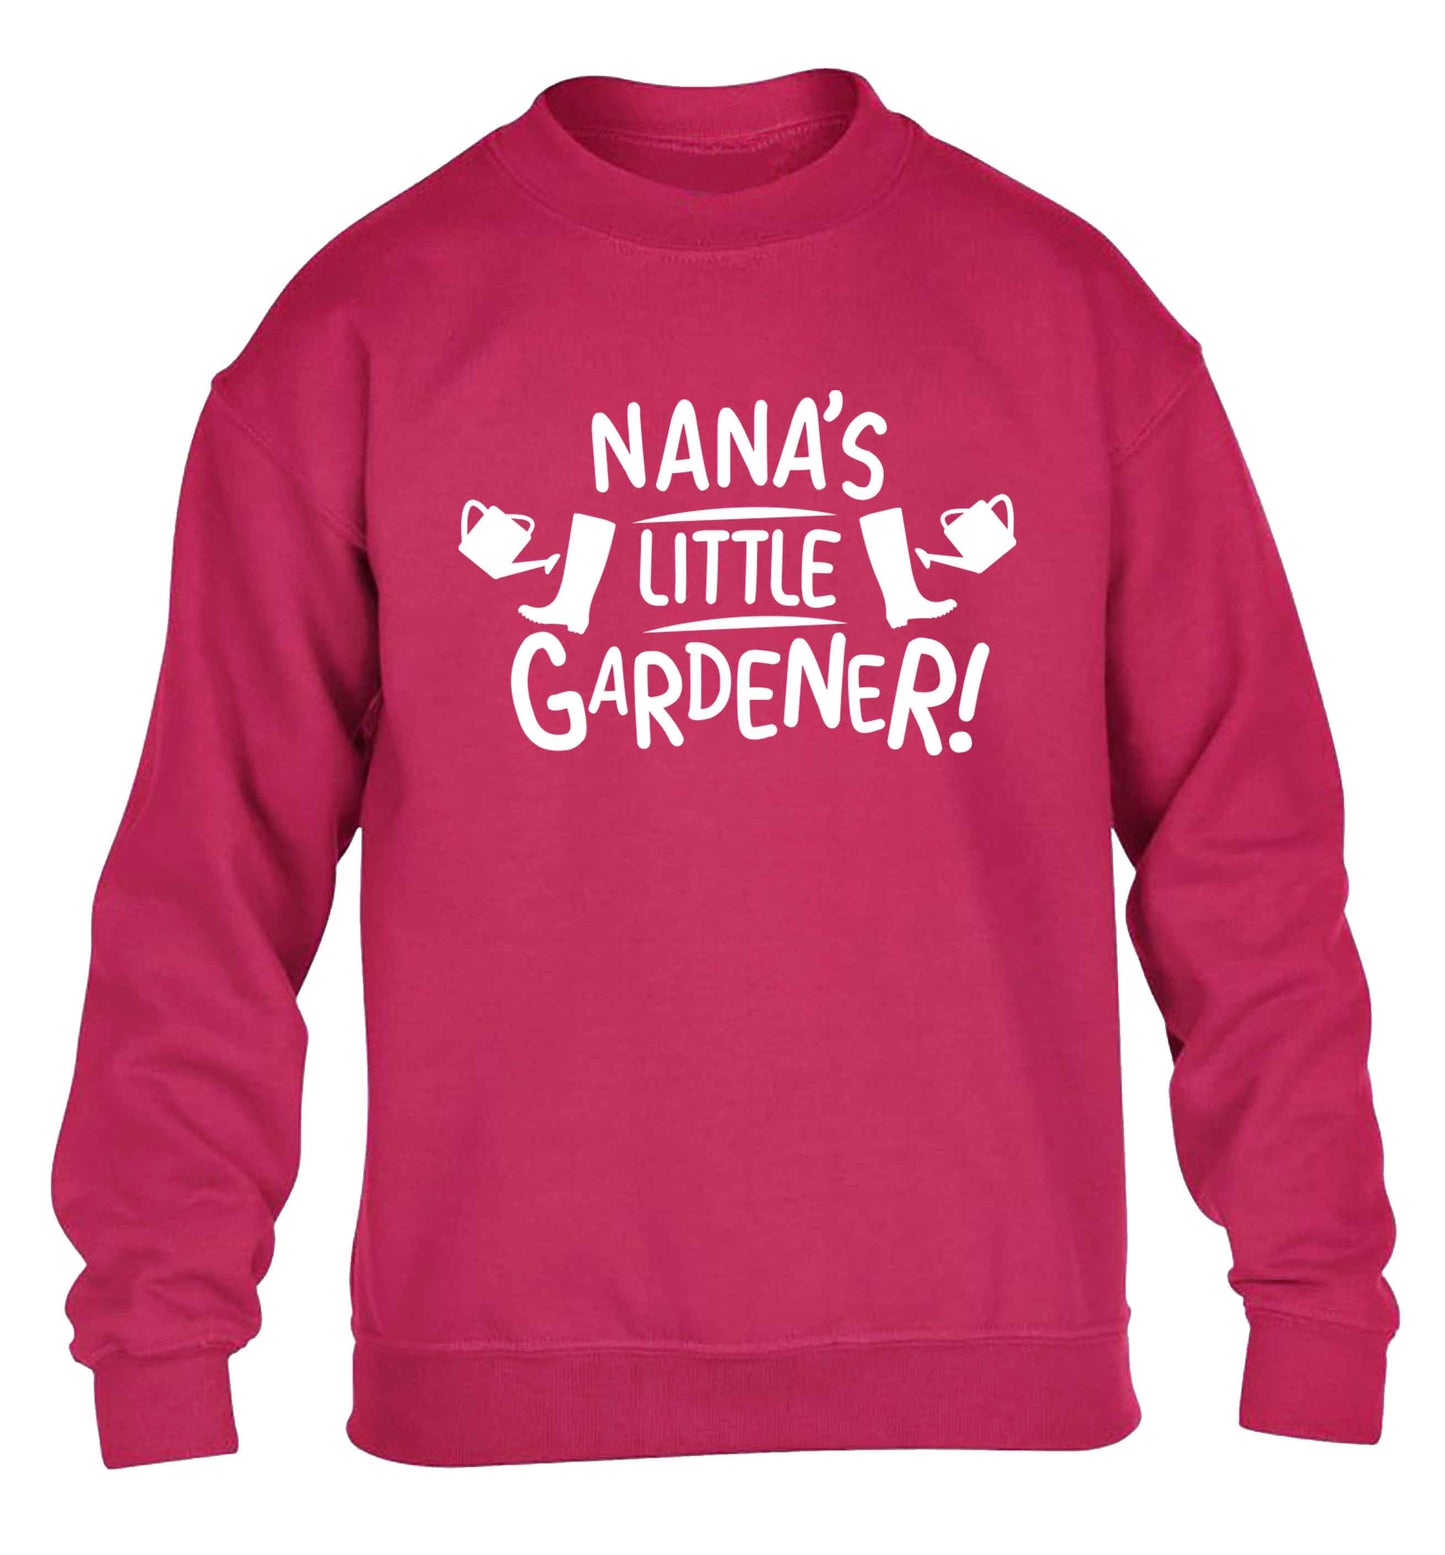 Nana's little gardener children's pink sweater 12-13 Years